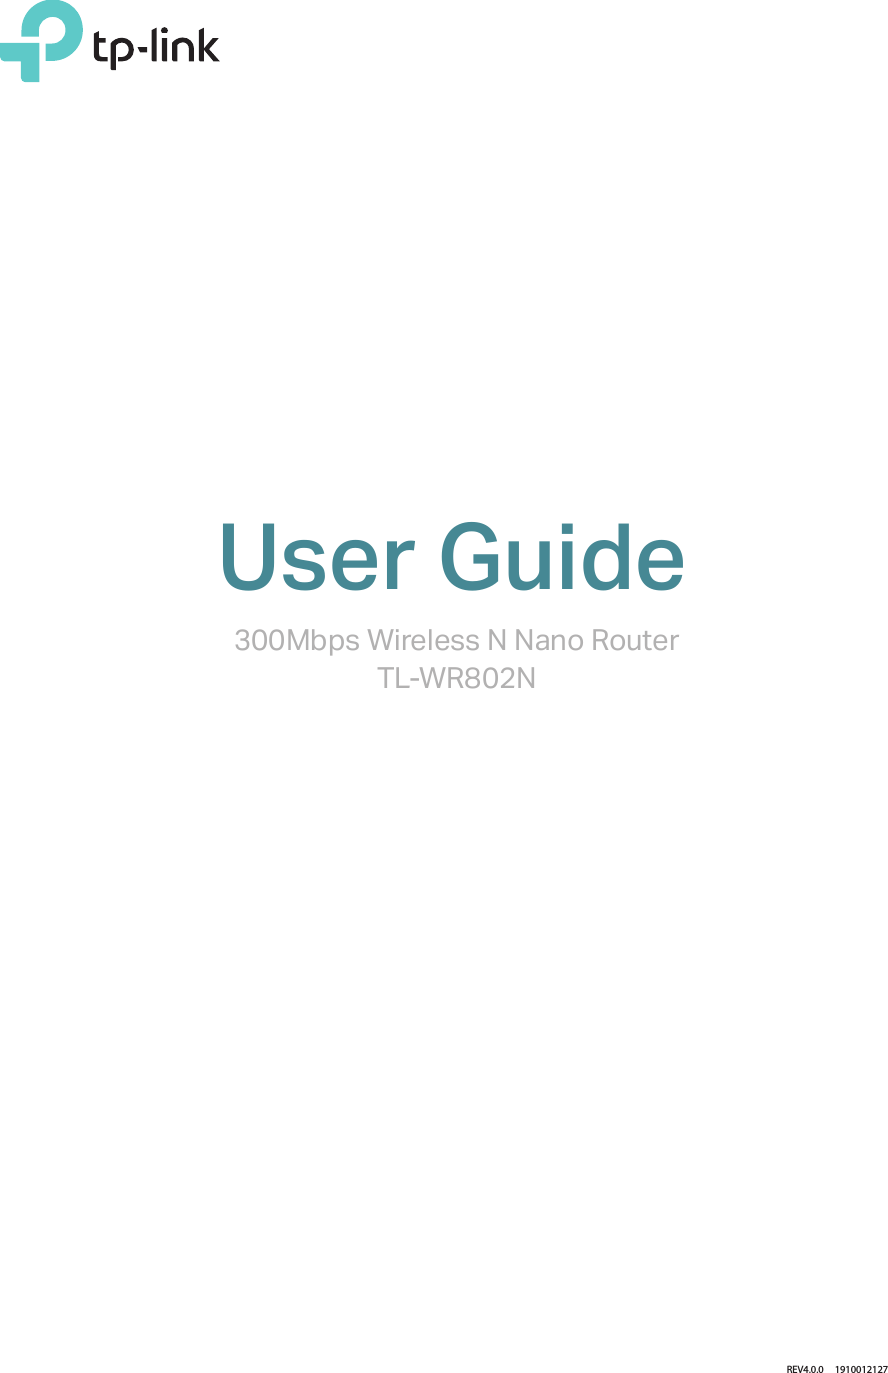 REV4.0.0     1910012127User Guide300Mbps Wireless N Nano RouterTL-WR802N